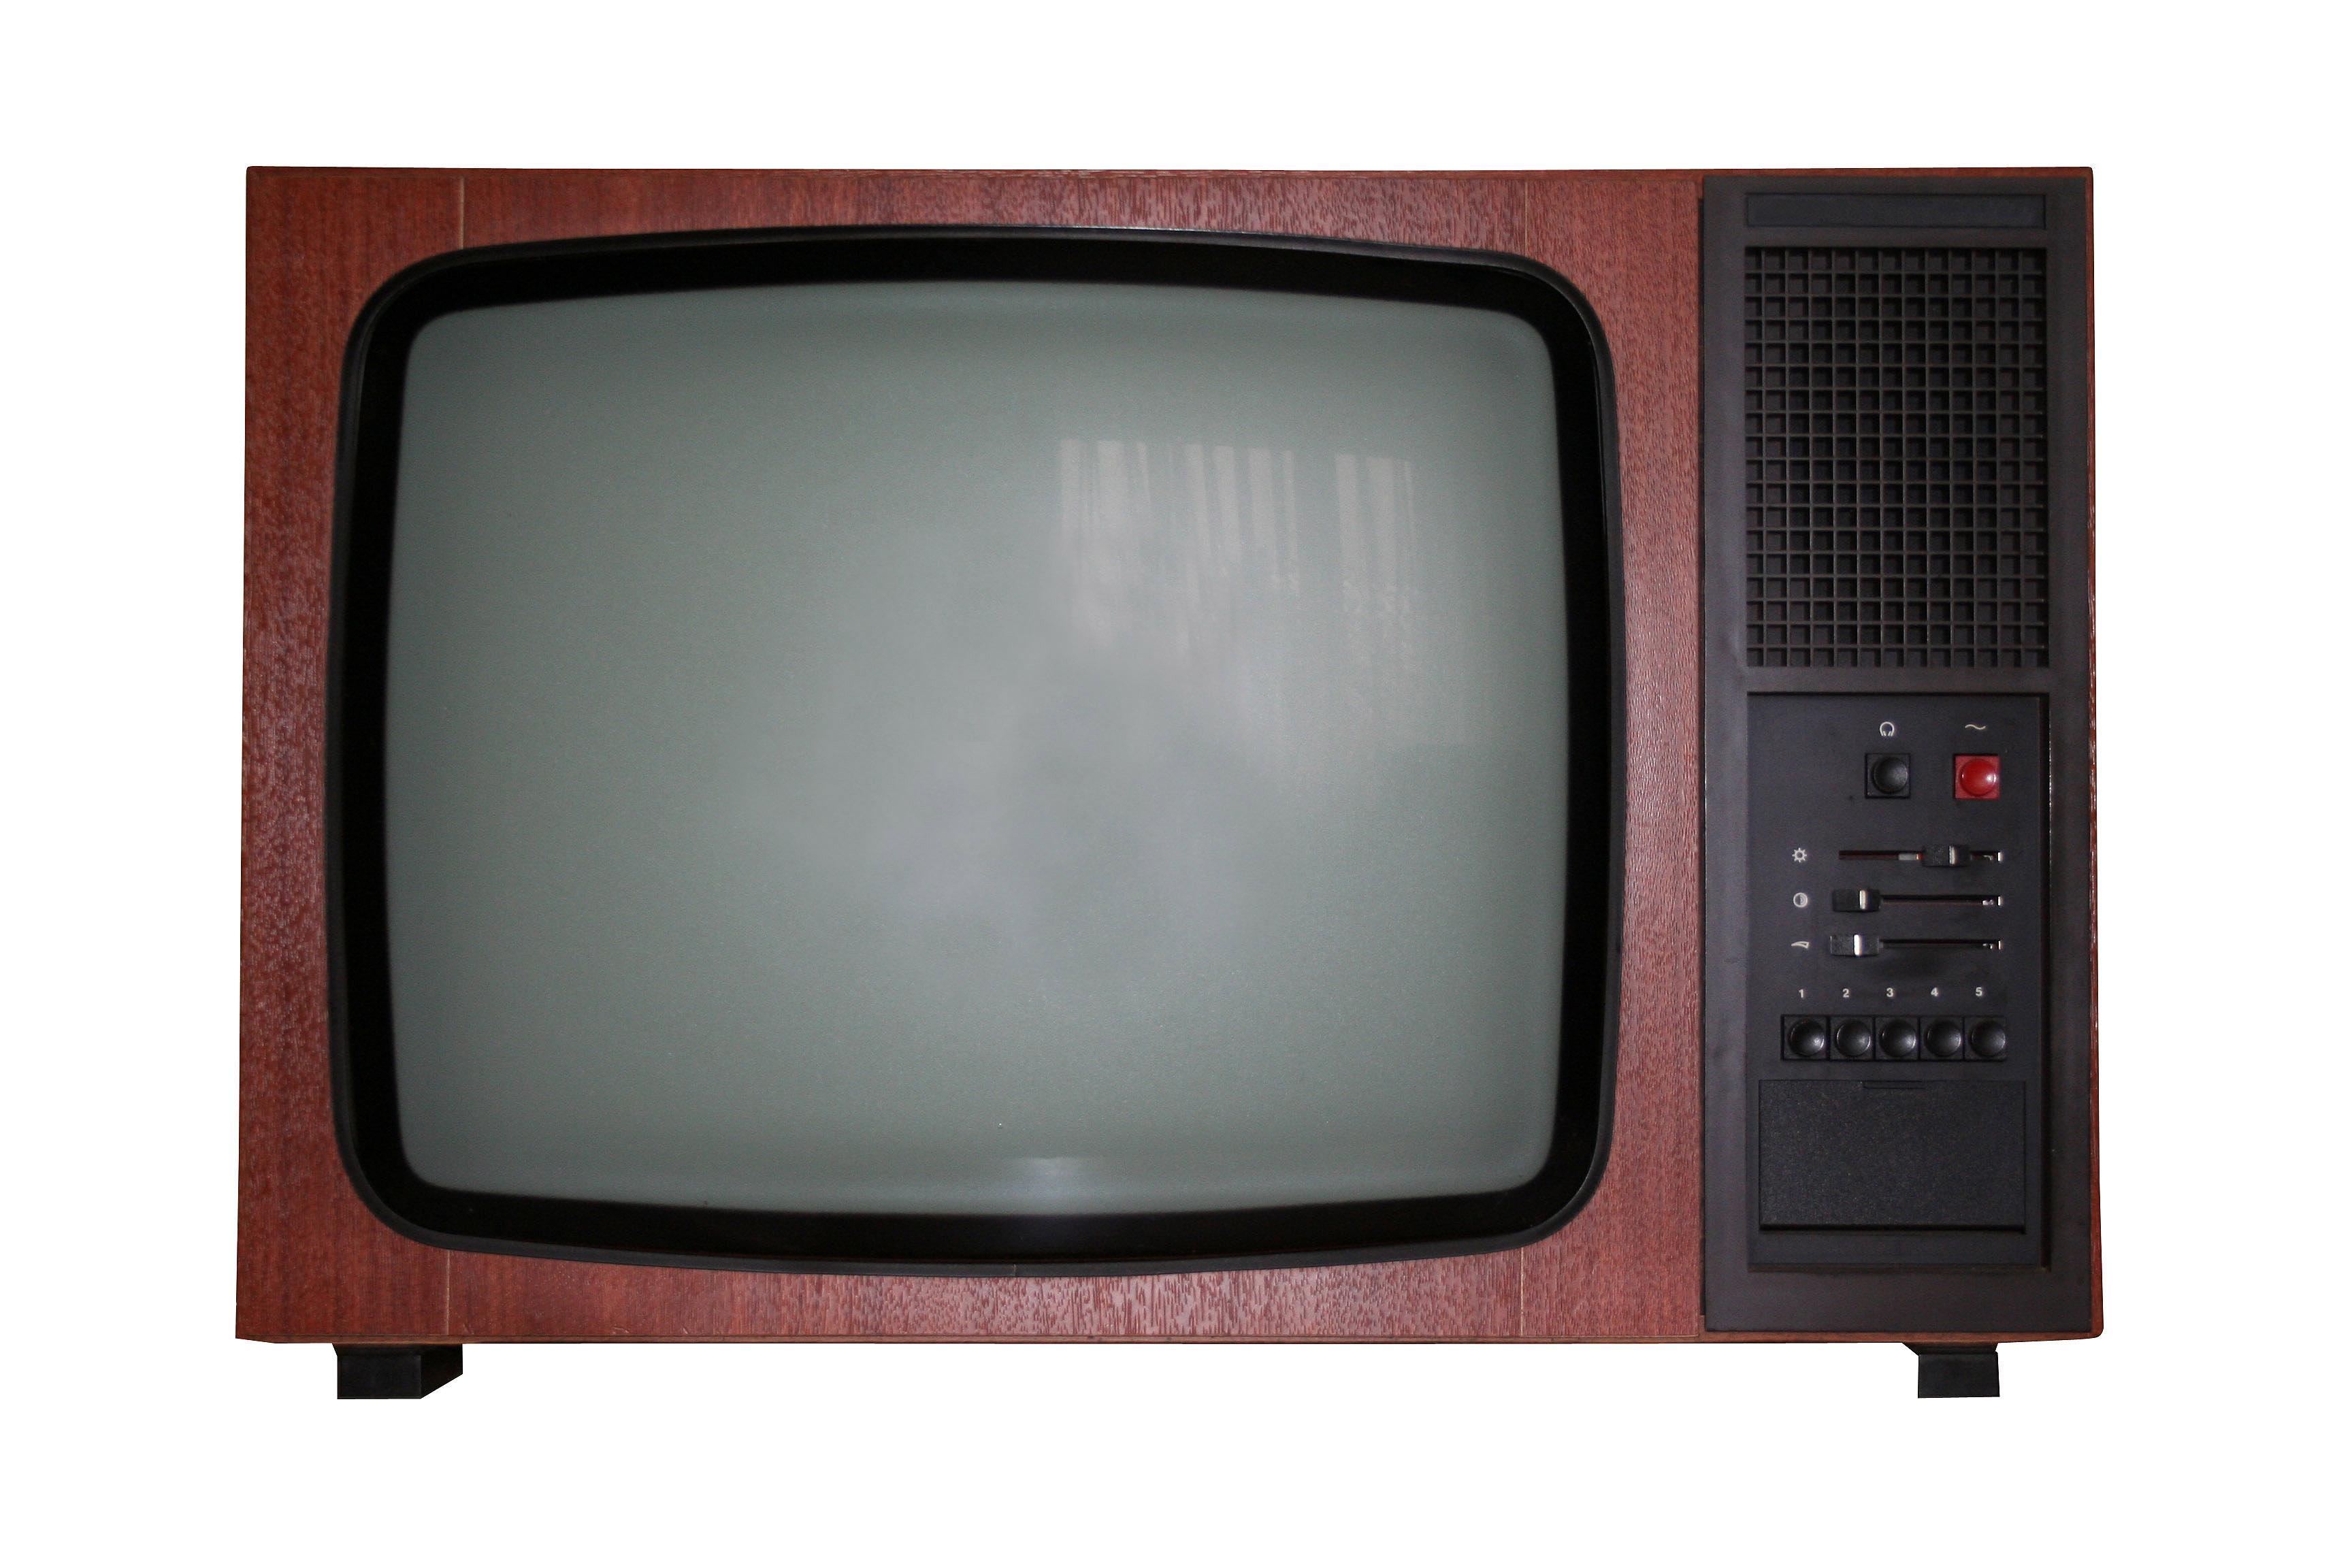 Куплю телевизор старый оскол. Ламповый телевизор электрон 703. Старый телевизор. Старинный телевизор. Старый аналоговый телевизор.